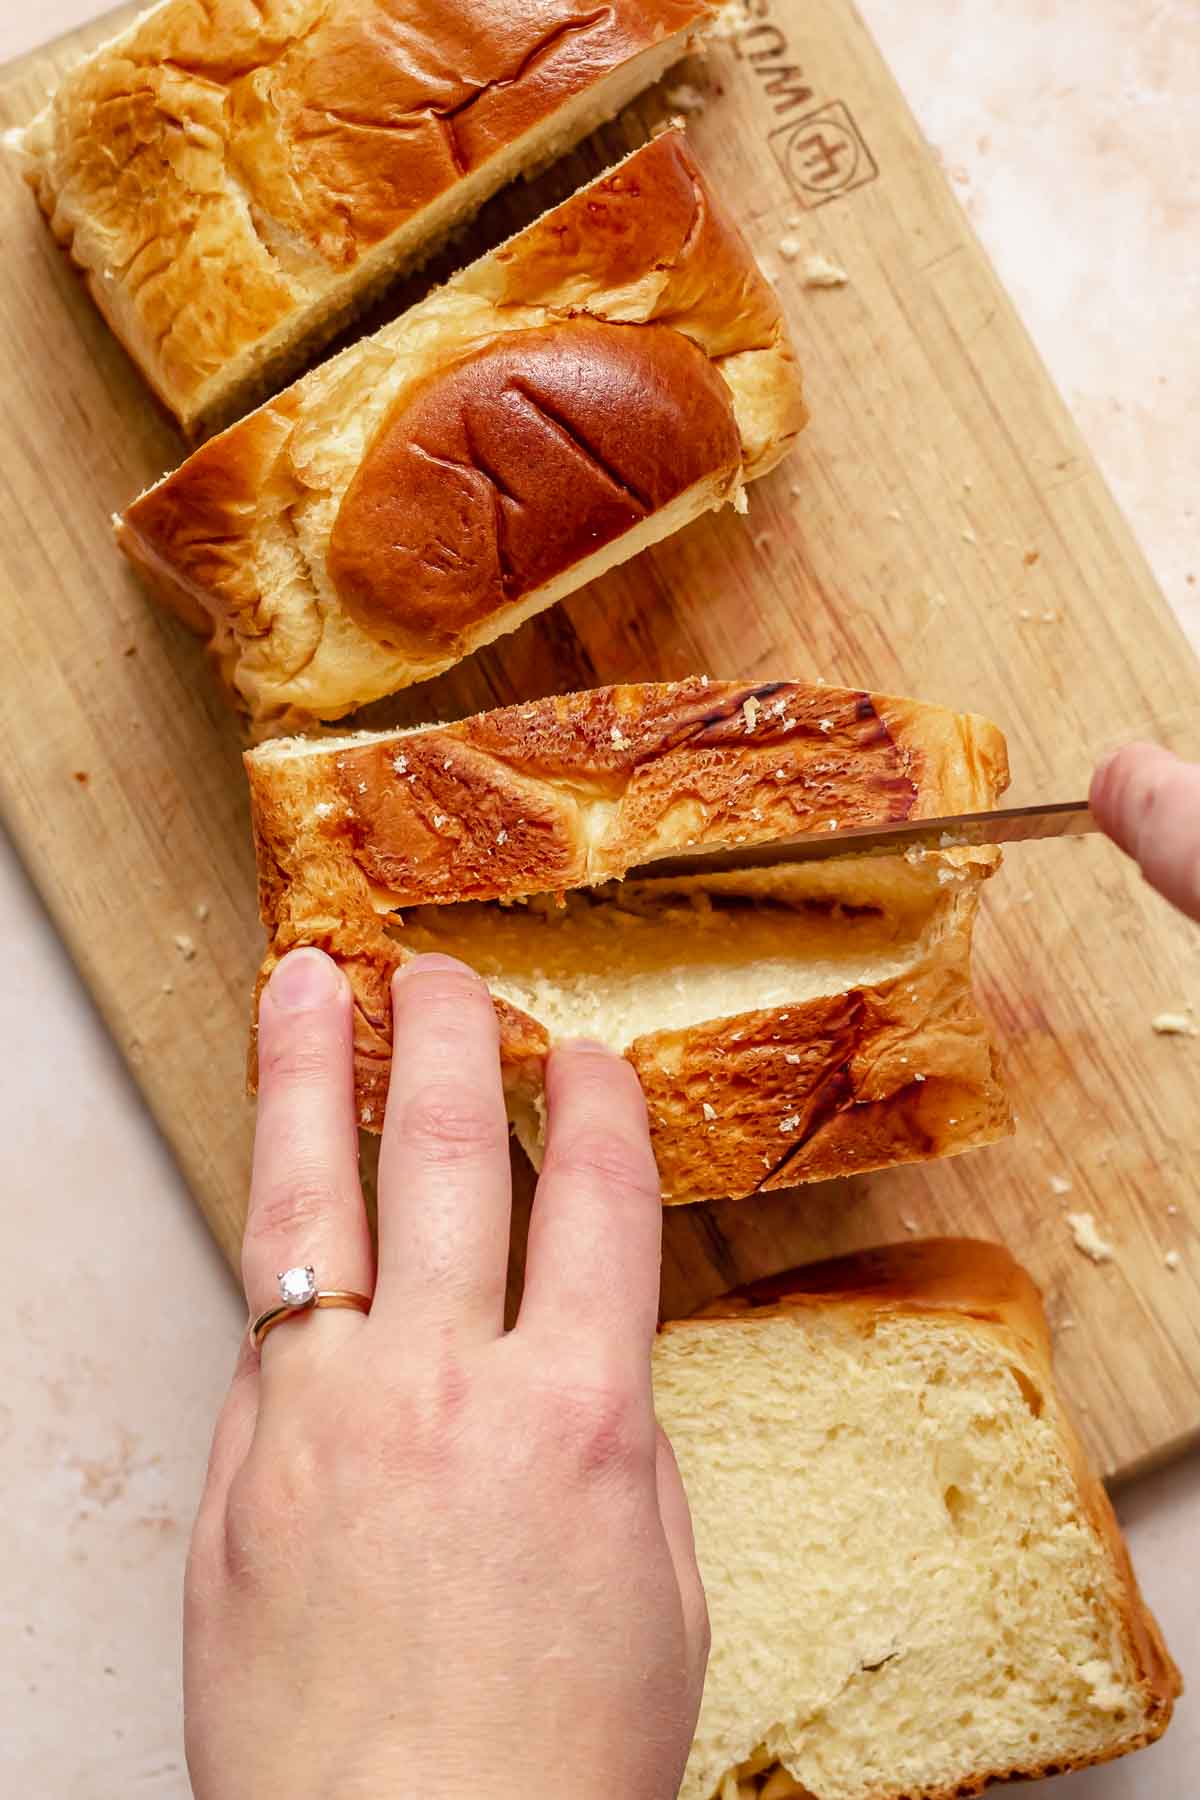 A knife cuts a pocket into a piece of brioche bread.